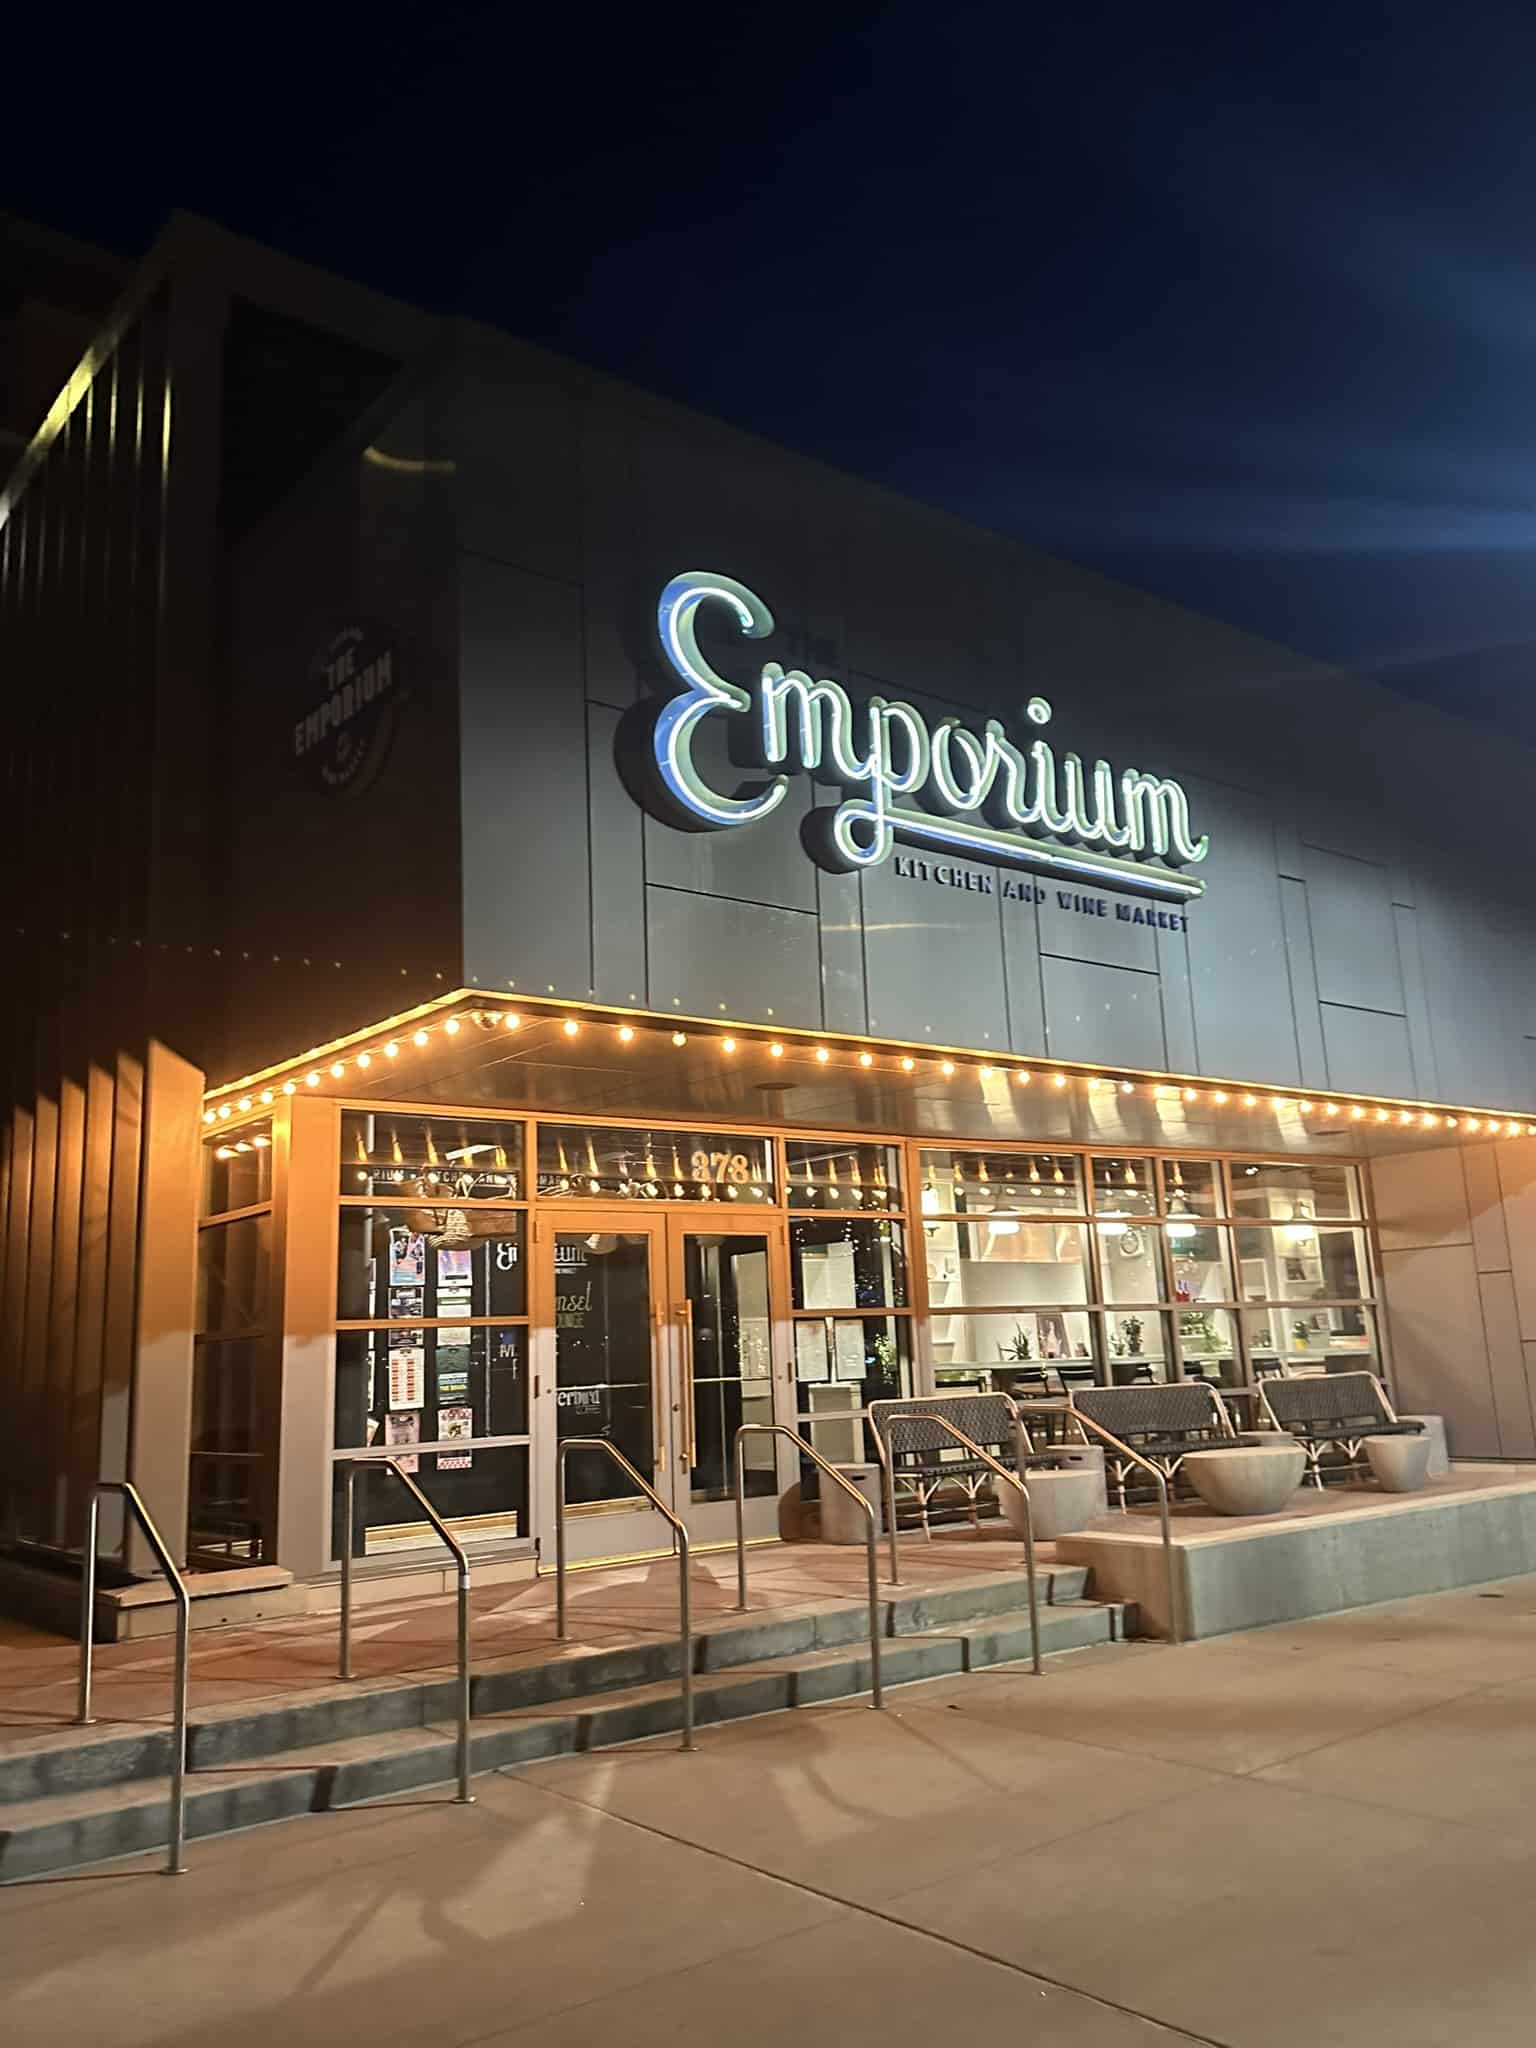 The Emporium: An American Brasserie